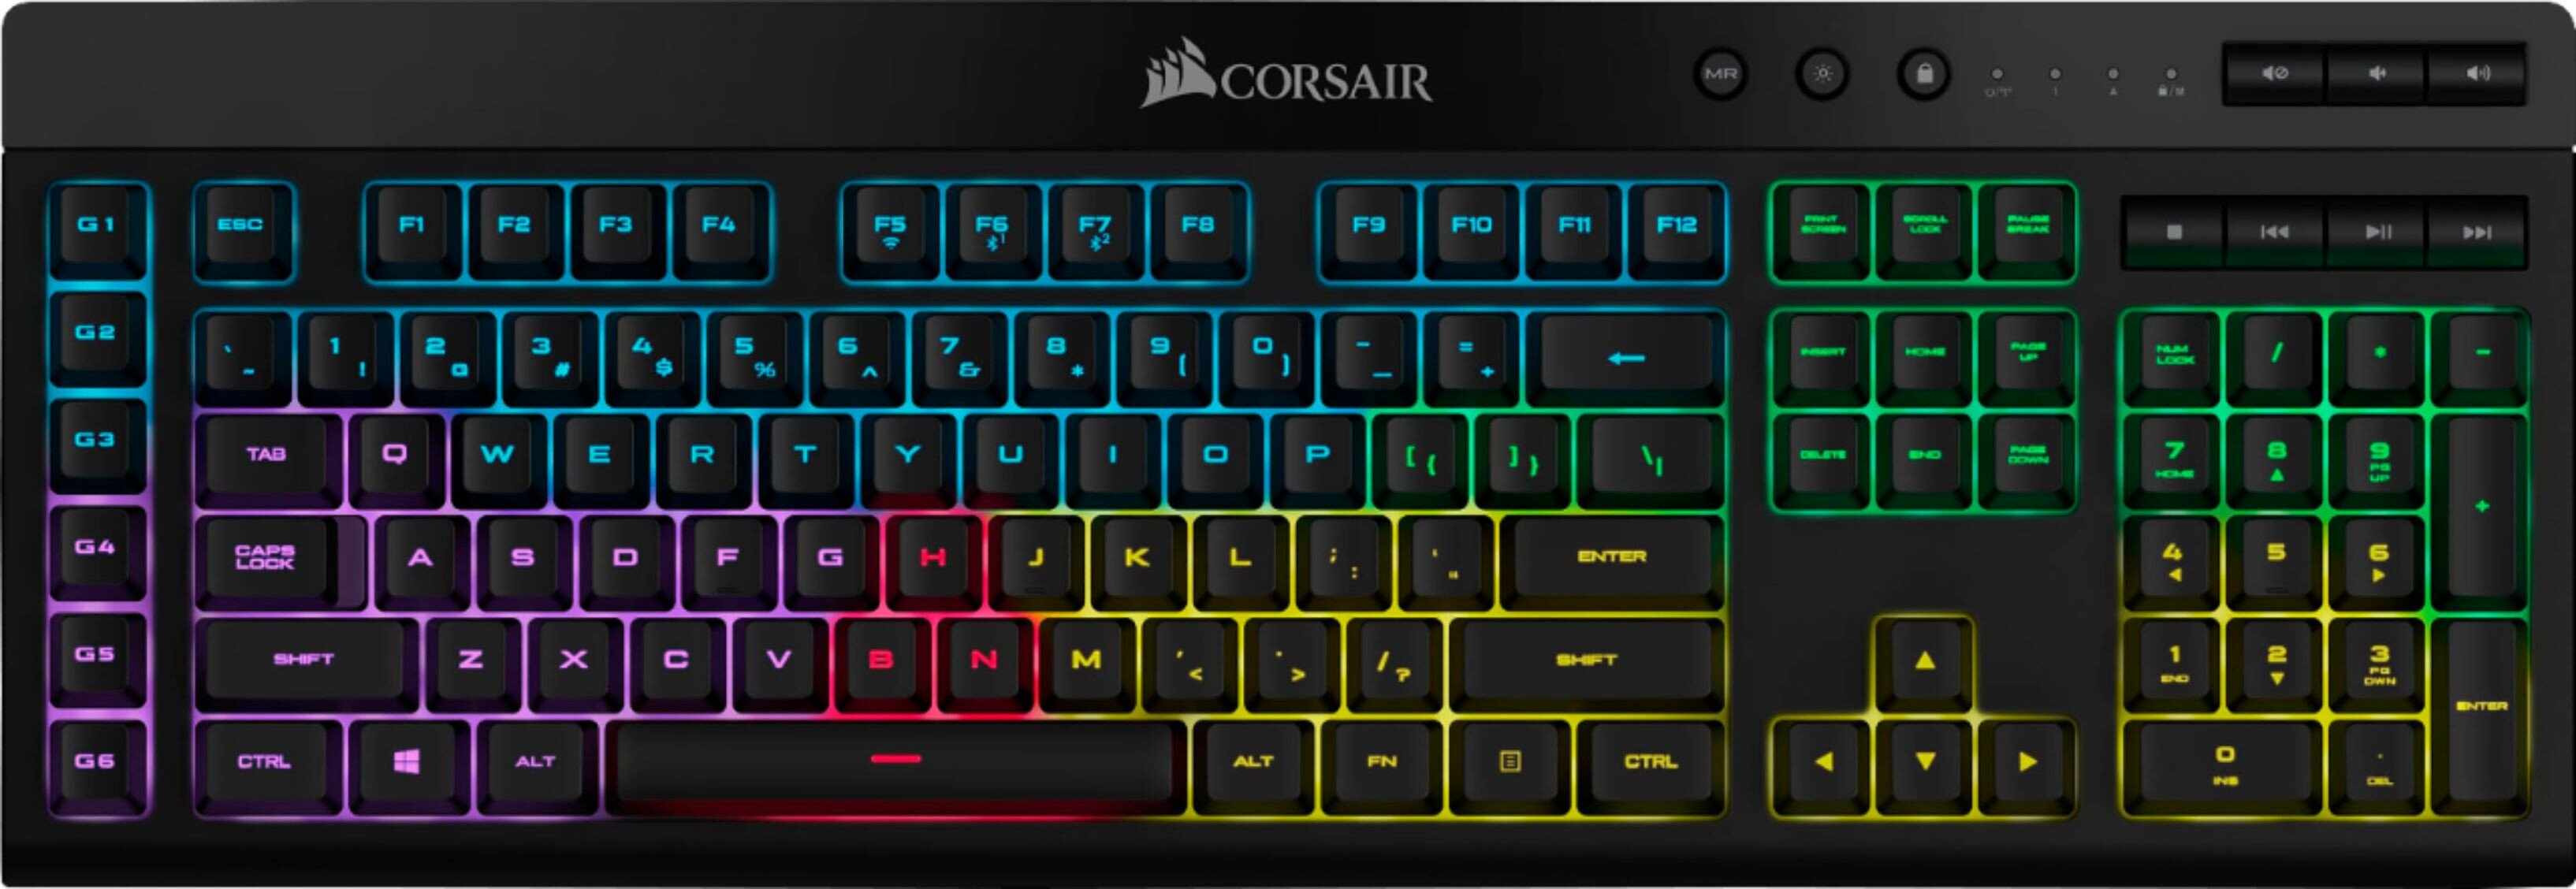 Corsair K57 RGB